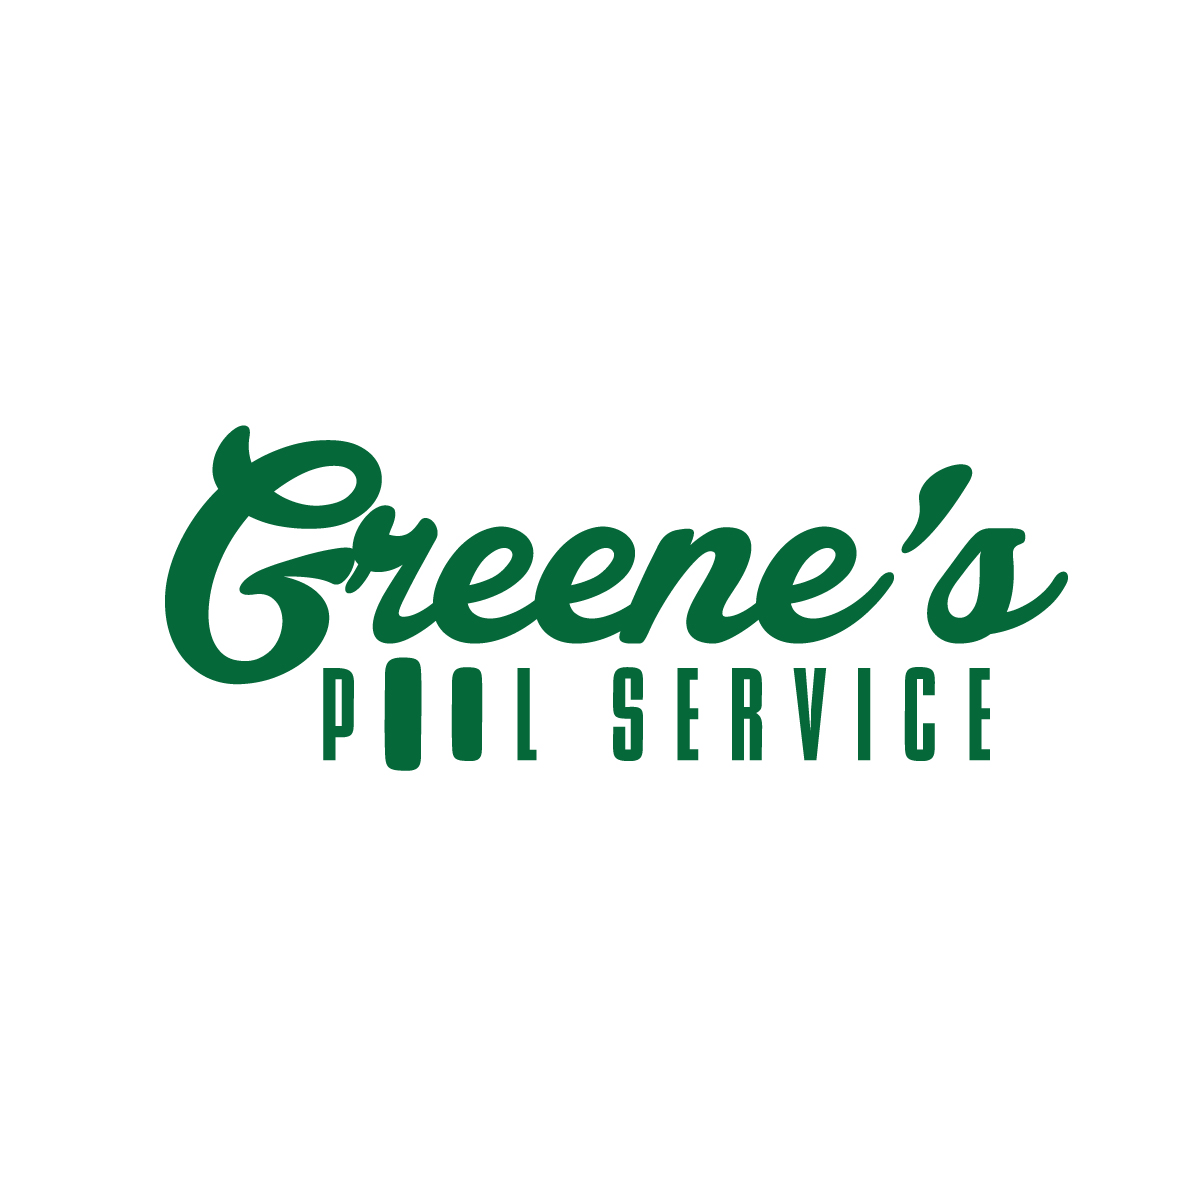 pool service and repair typographic logo